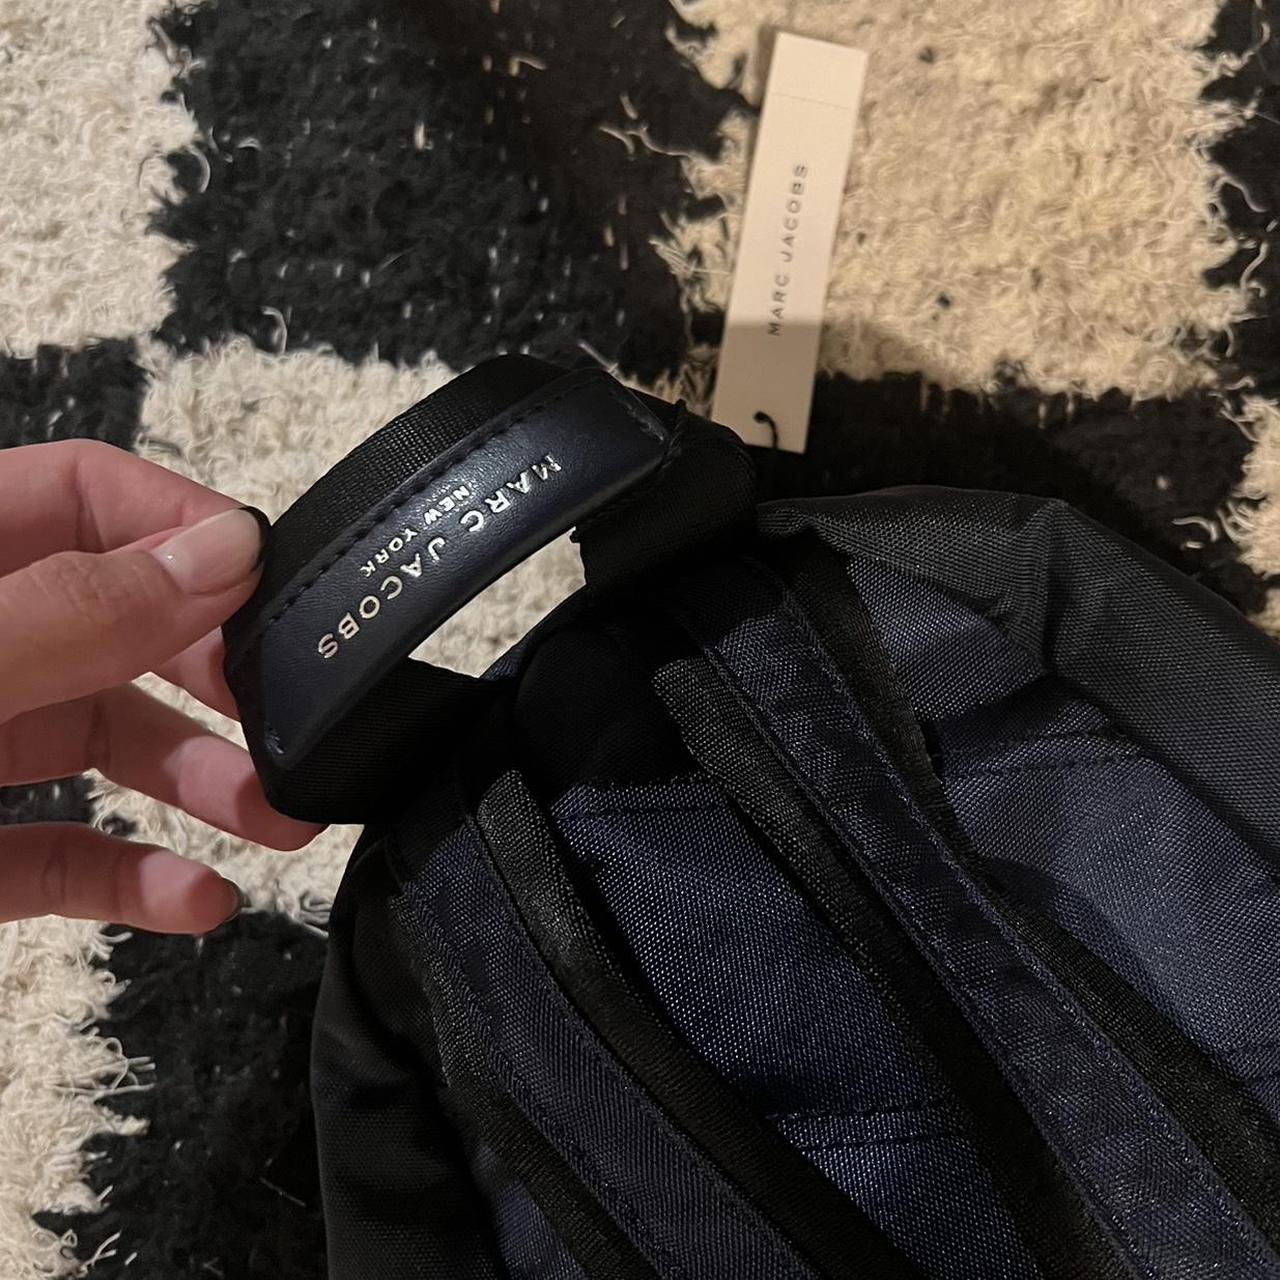 Marc Jacobs mini trek backpack nylon fabric with... - Depop